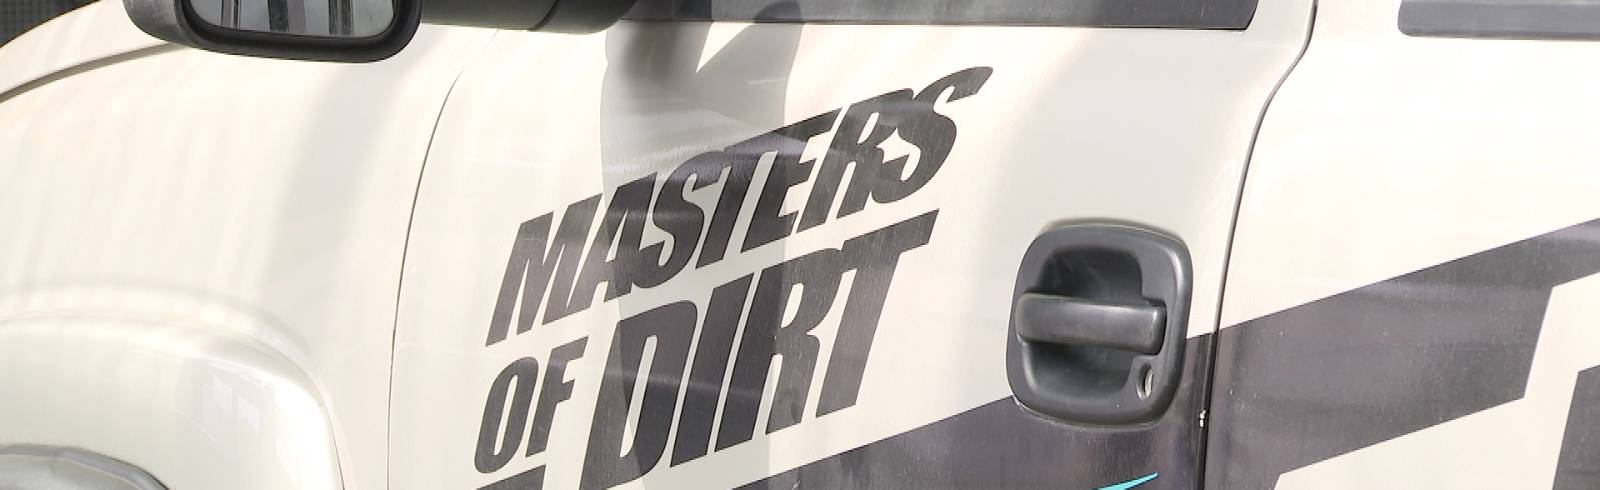 Masters of Dirt in der Stadthalle!